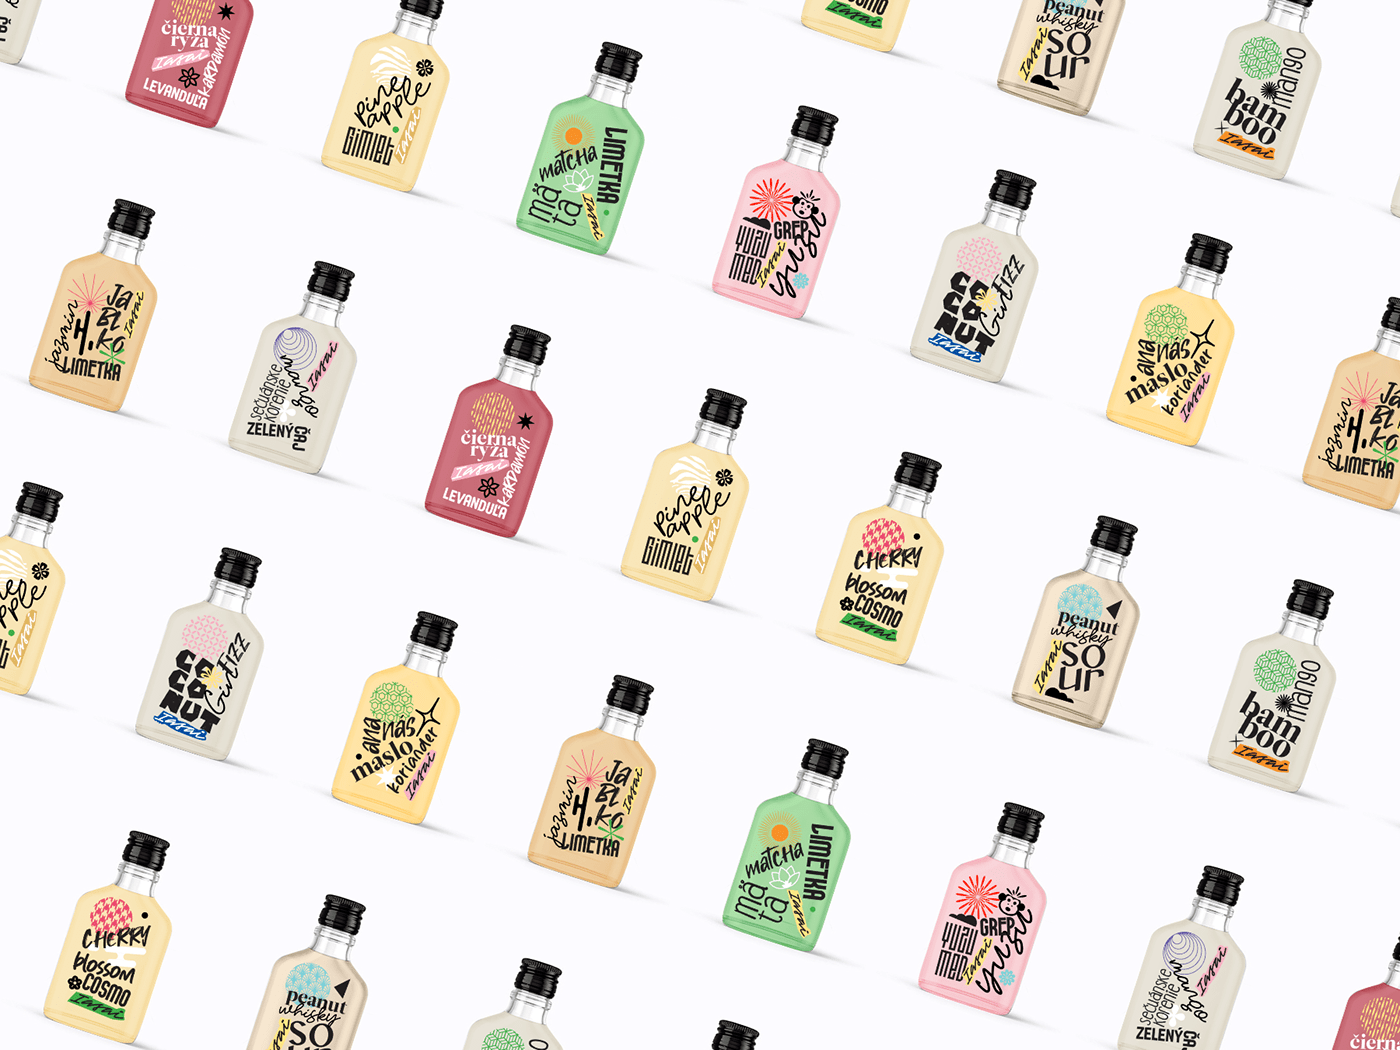 adobe illustrator asian brand identity design drink drinks graphic label design labels Packaging